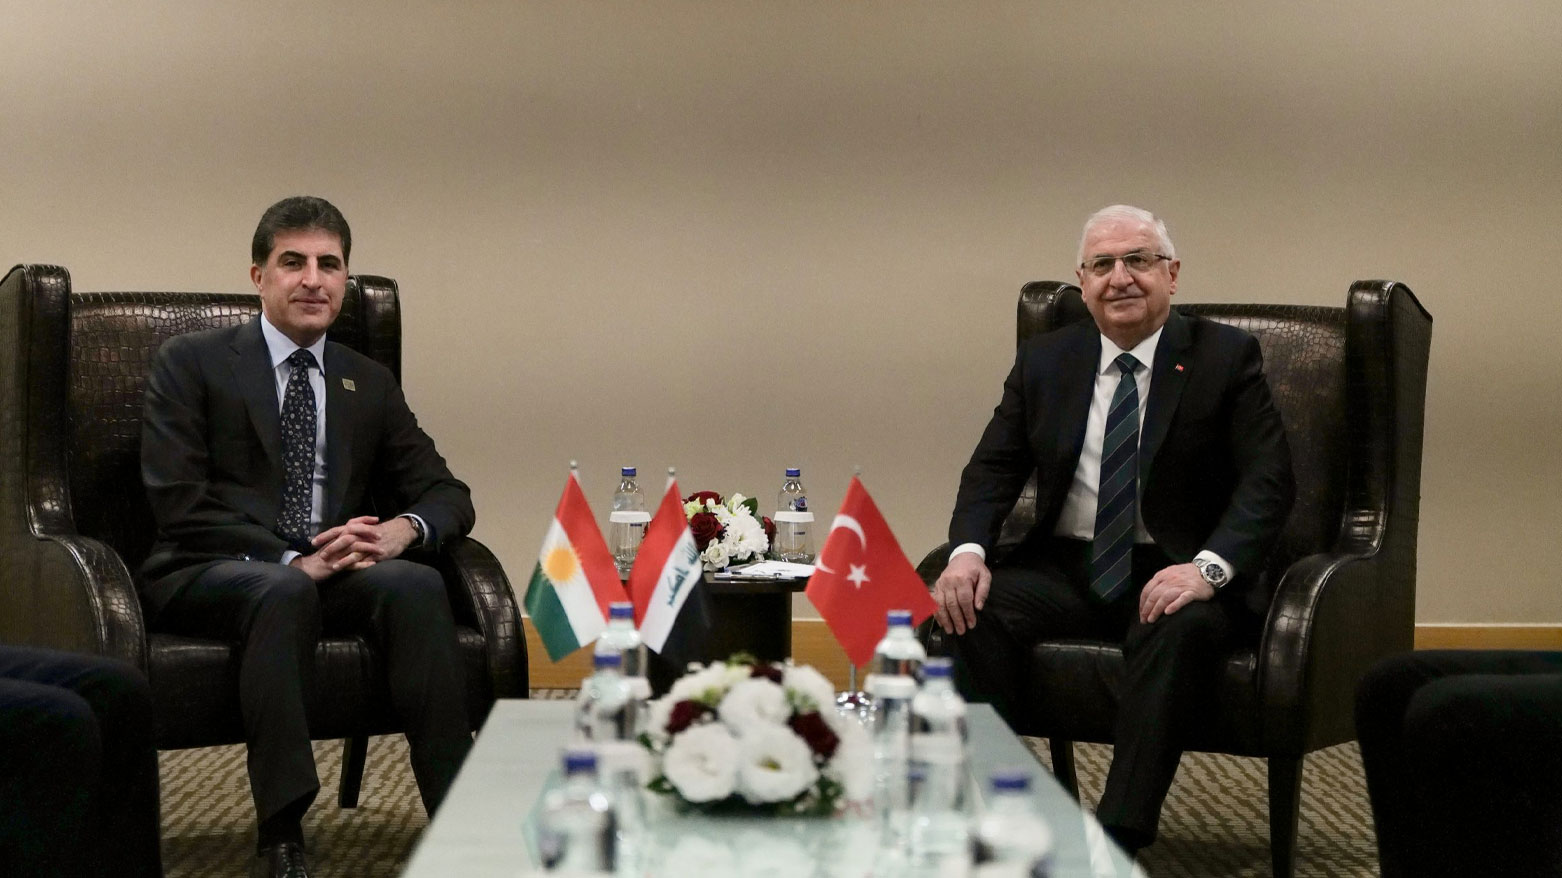 President Nechirvan Barzani (Left) meeting with Minister of National Defense of Turkey Yaşar Güler (Right). (Photo: KRG)